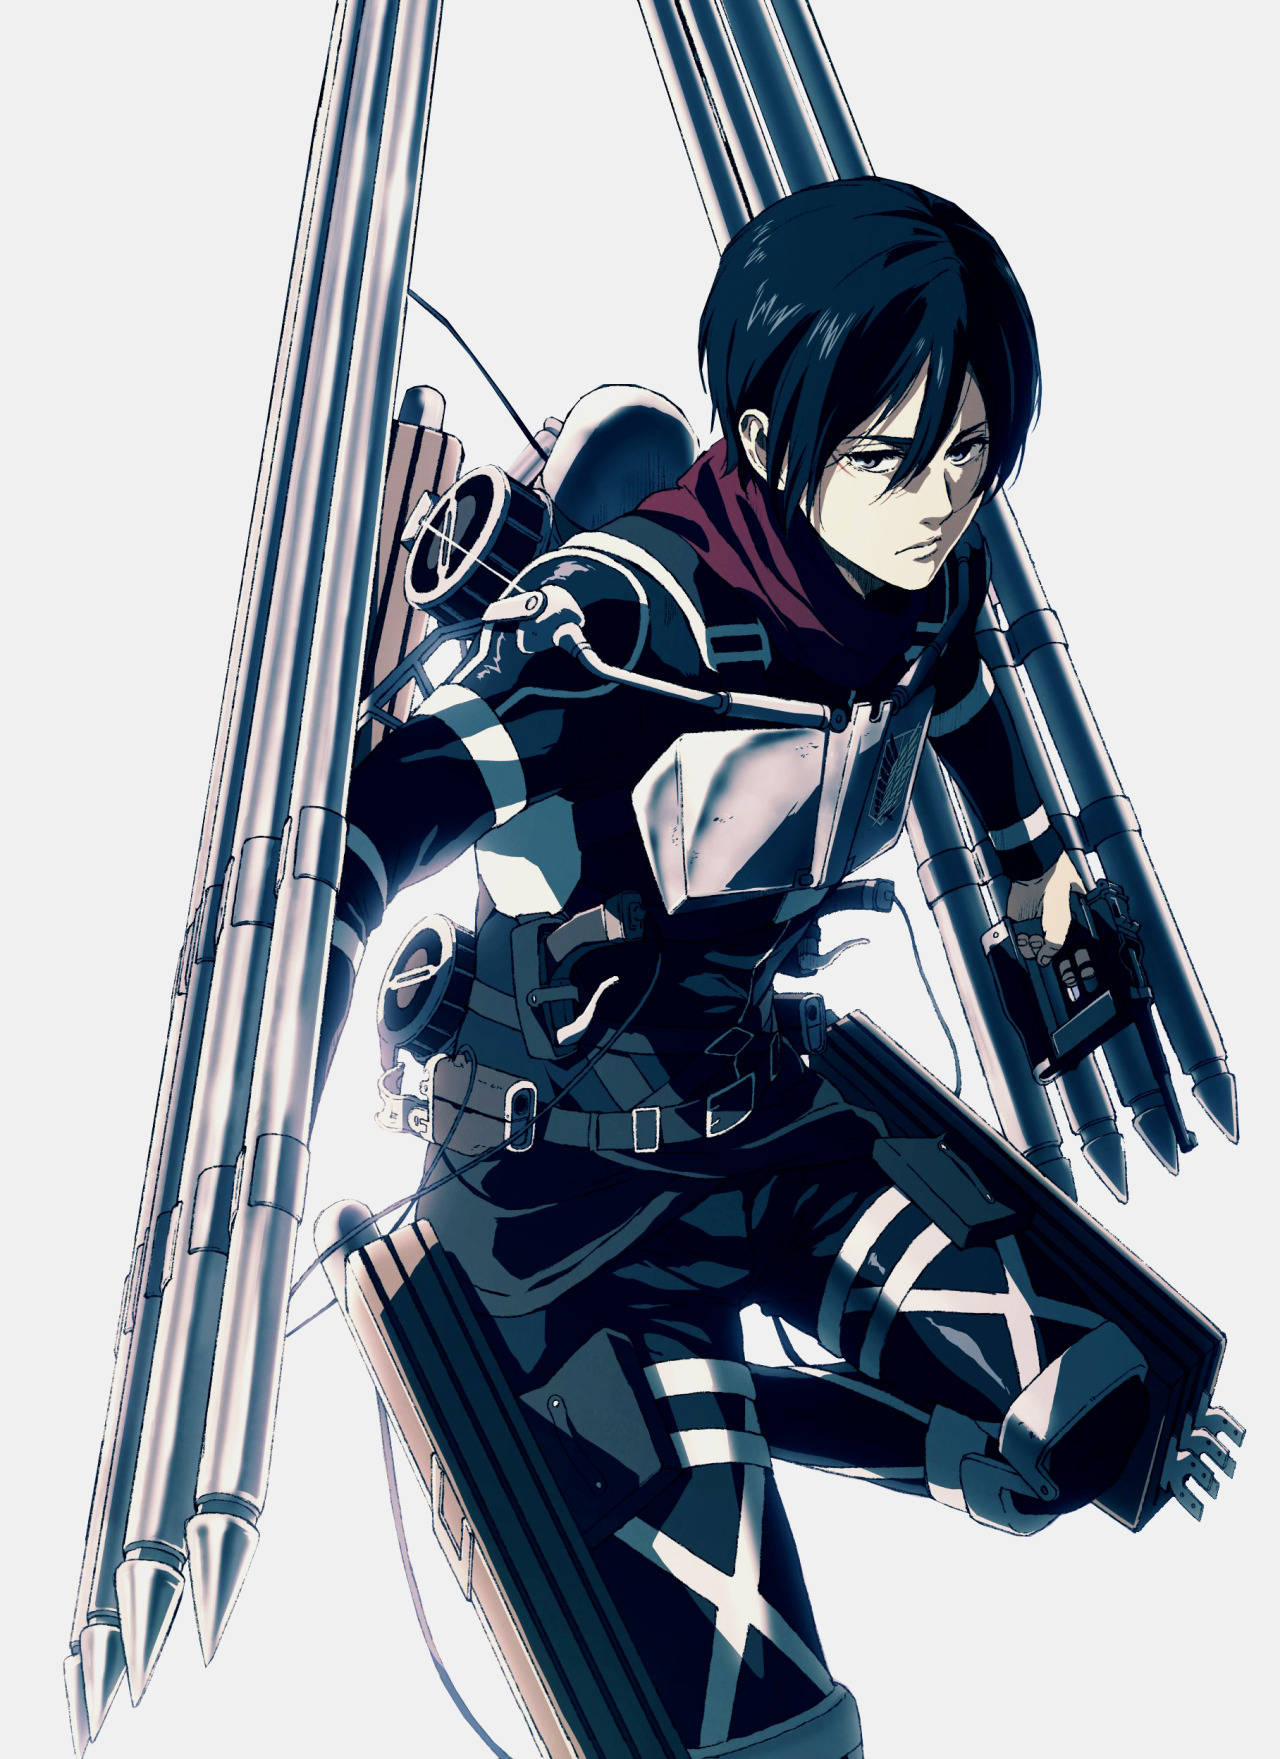 Mikasa Ackerman Thunder Spear Wallpaper